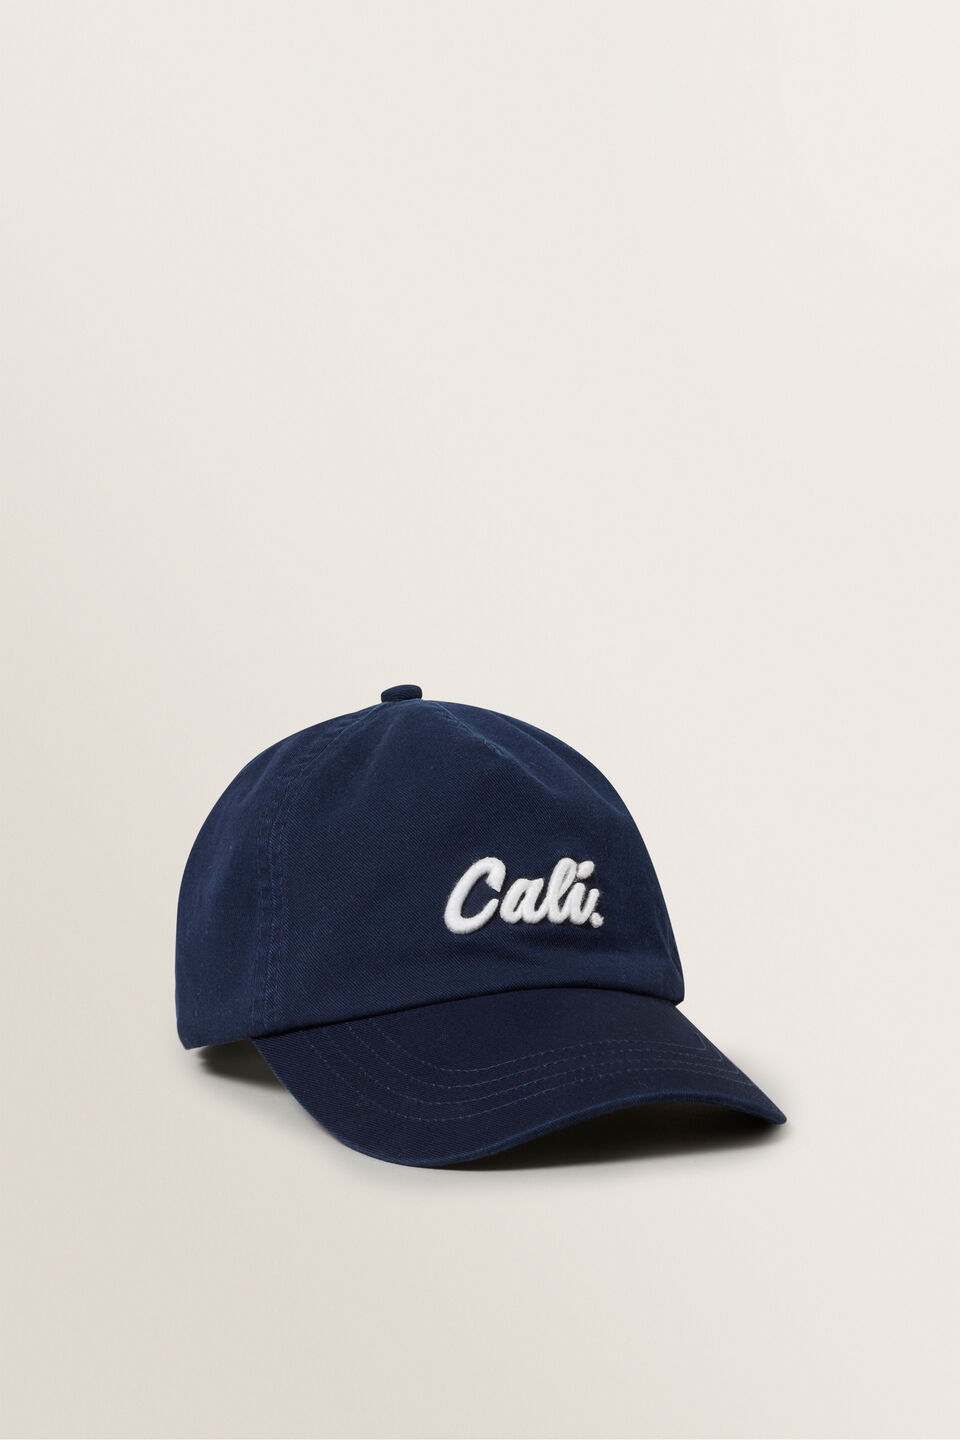 Cali Washed Cap  